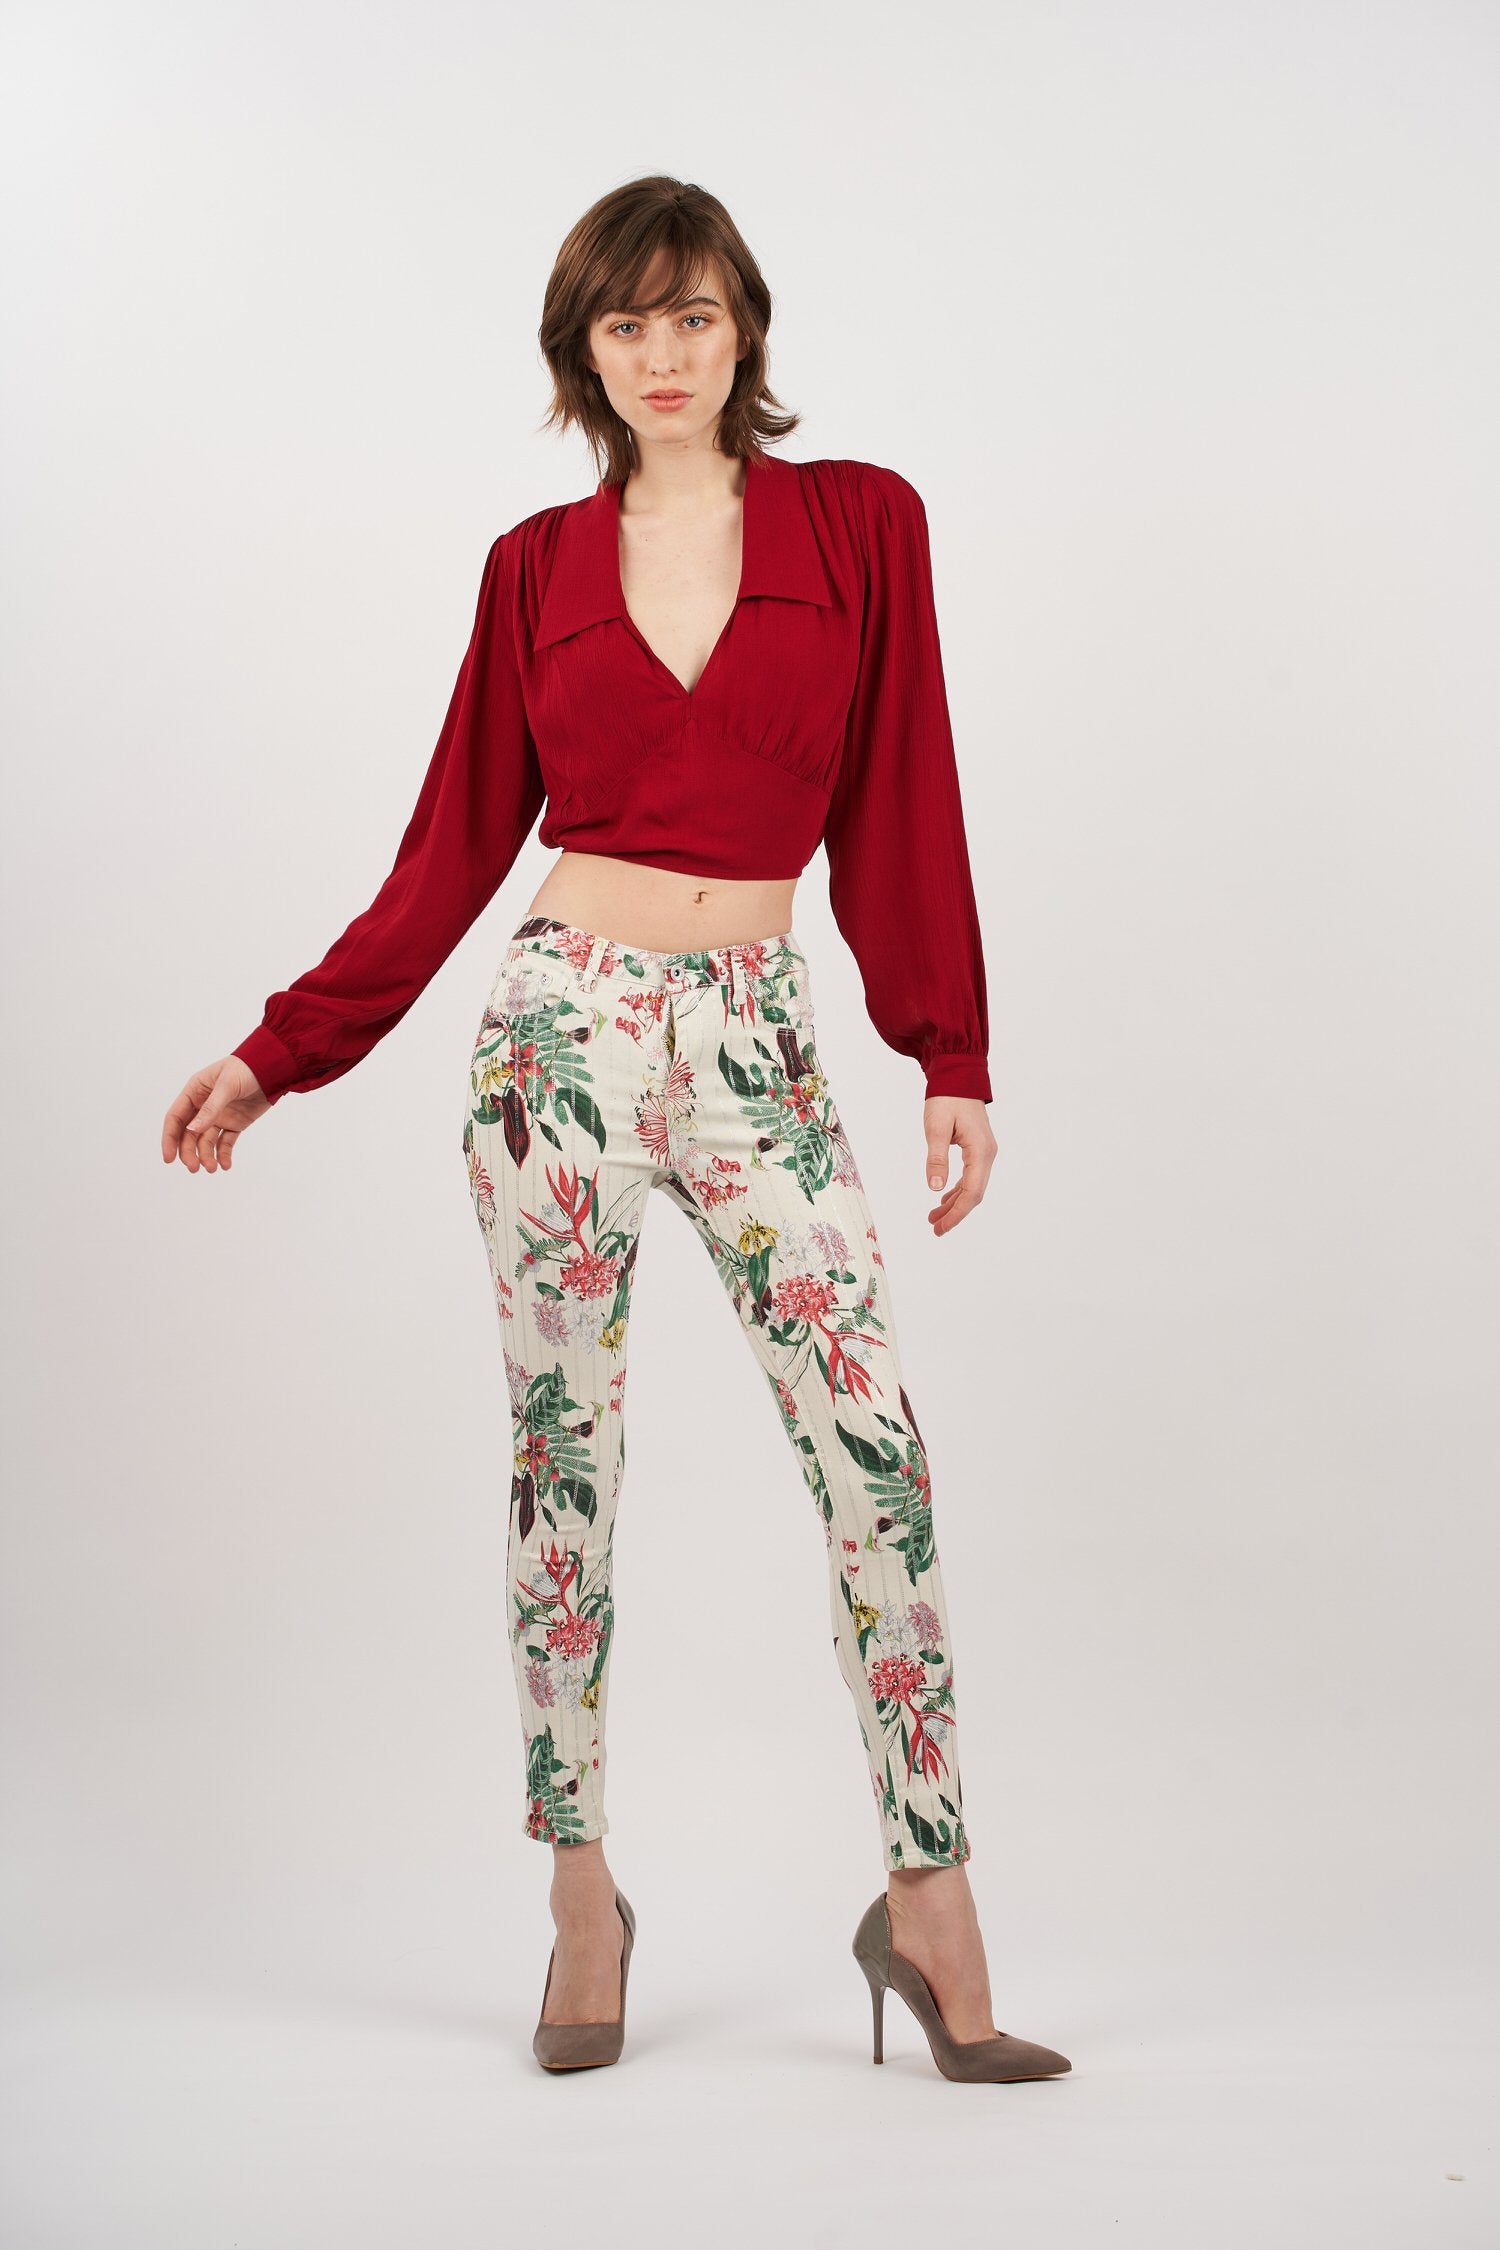 Vegetable print pants - Asia